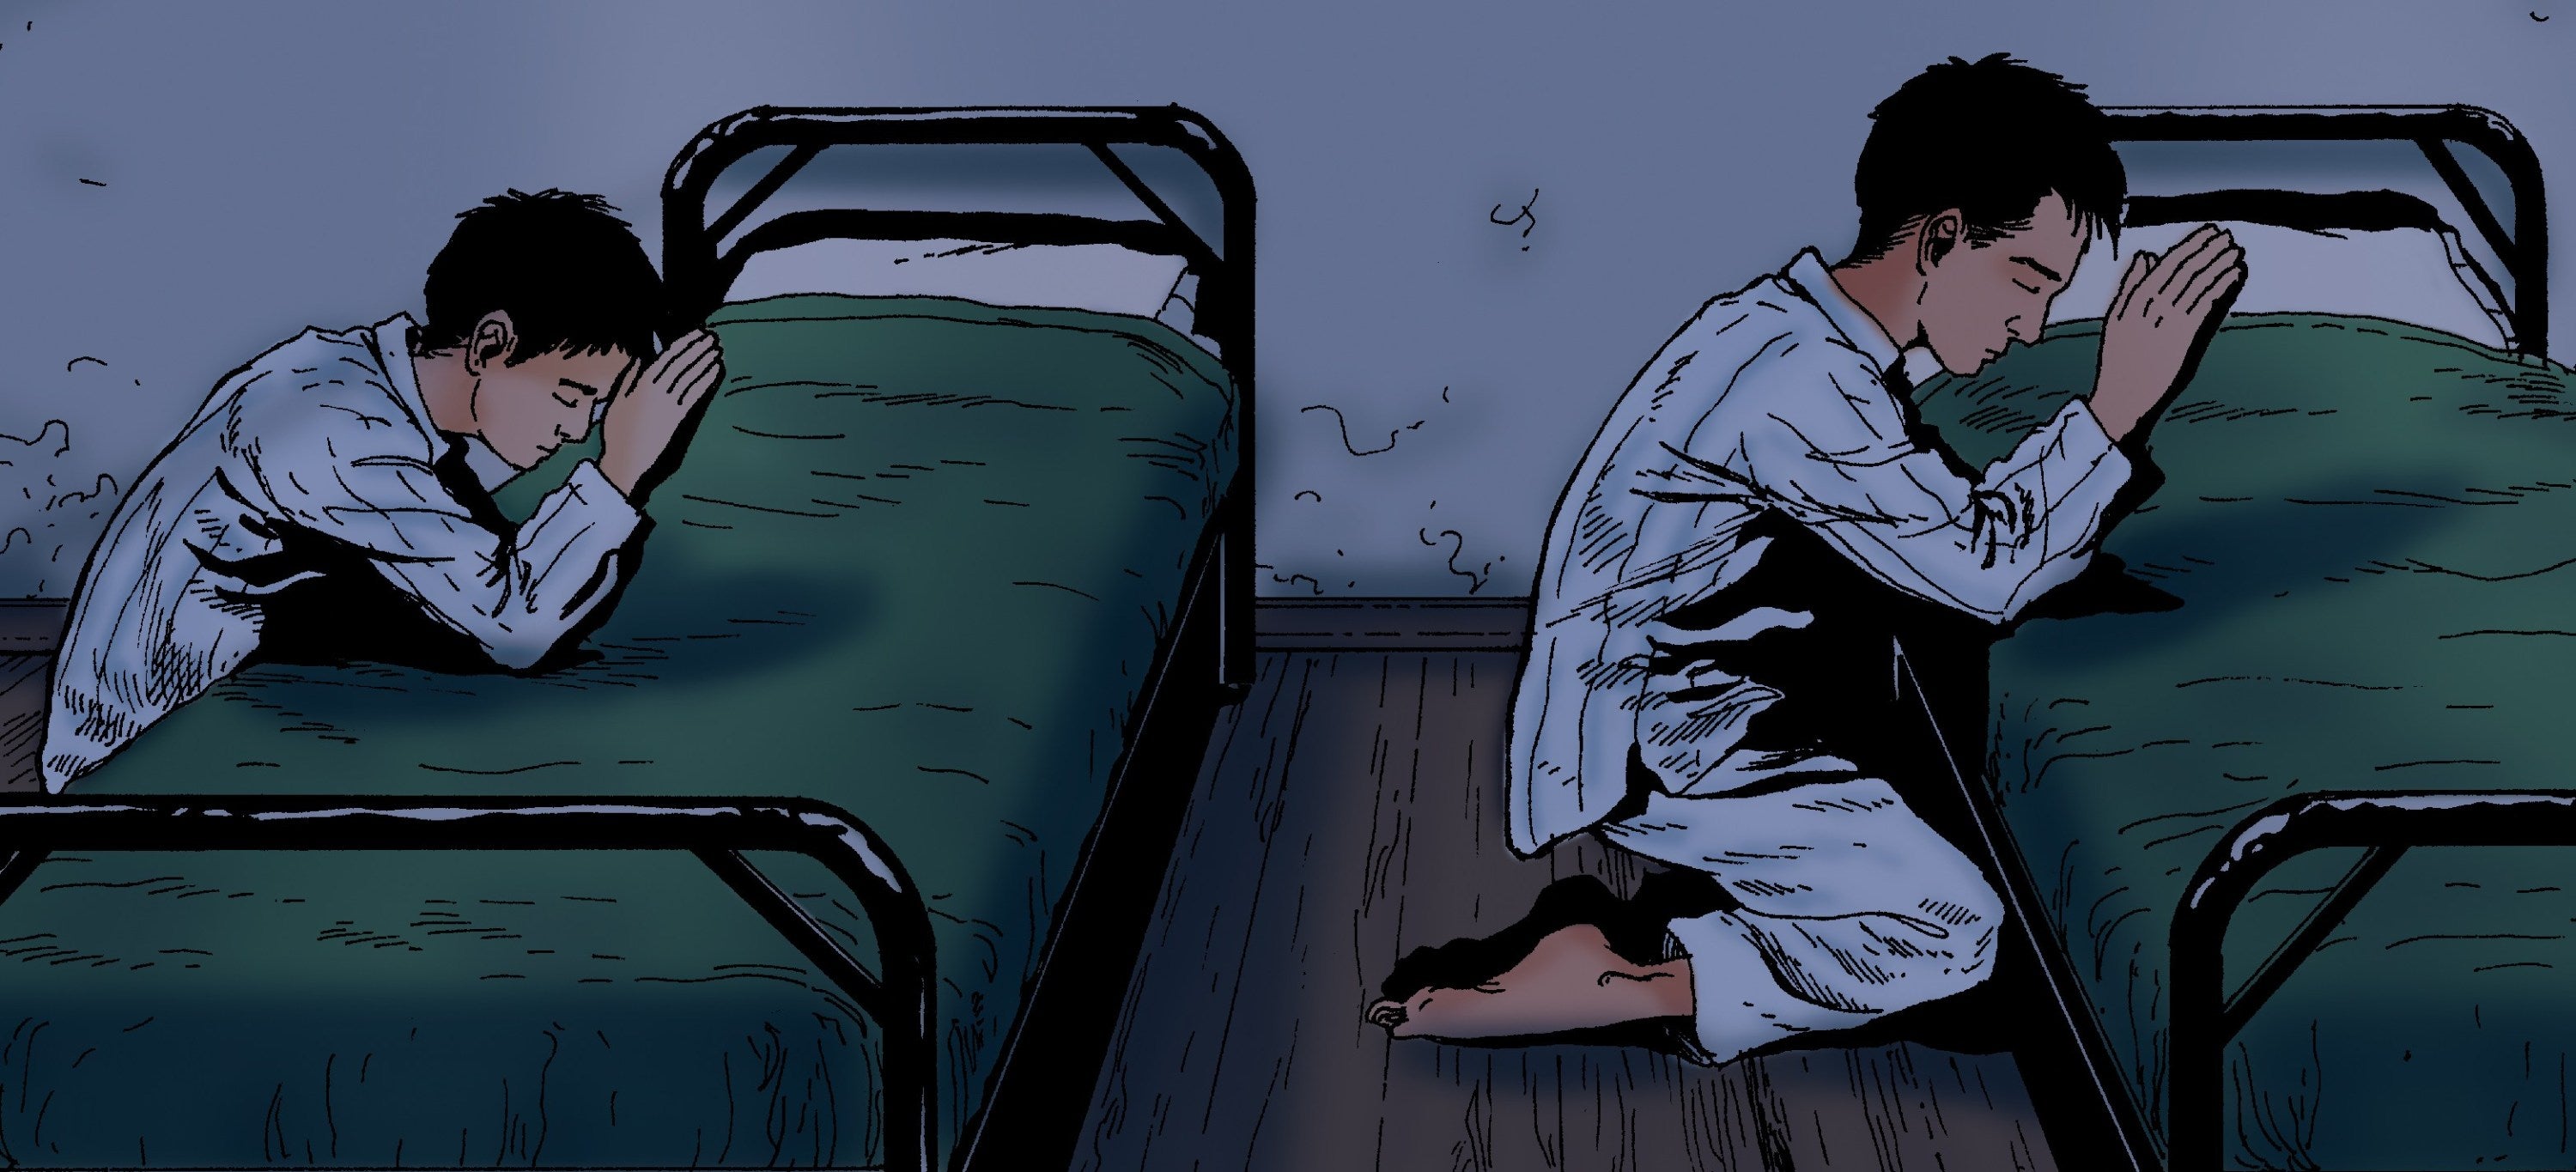 graphic novel  image of Indigenous boys praying at bedside